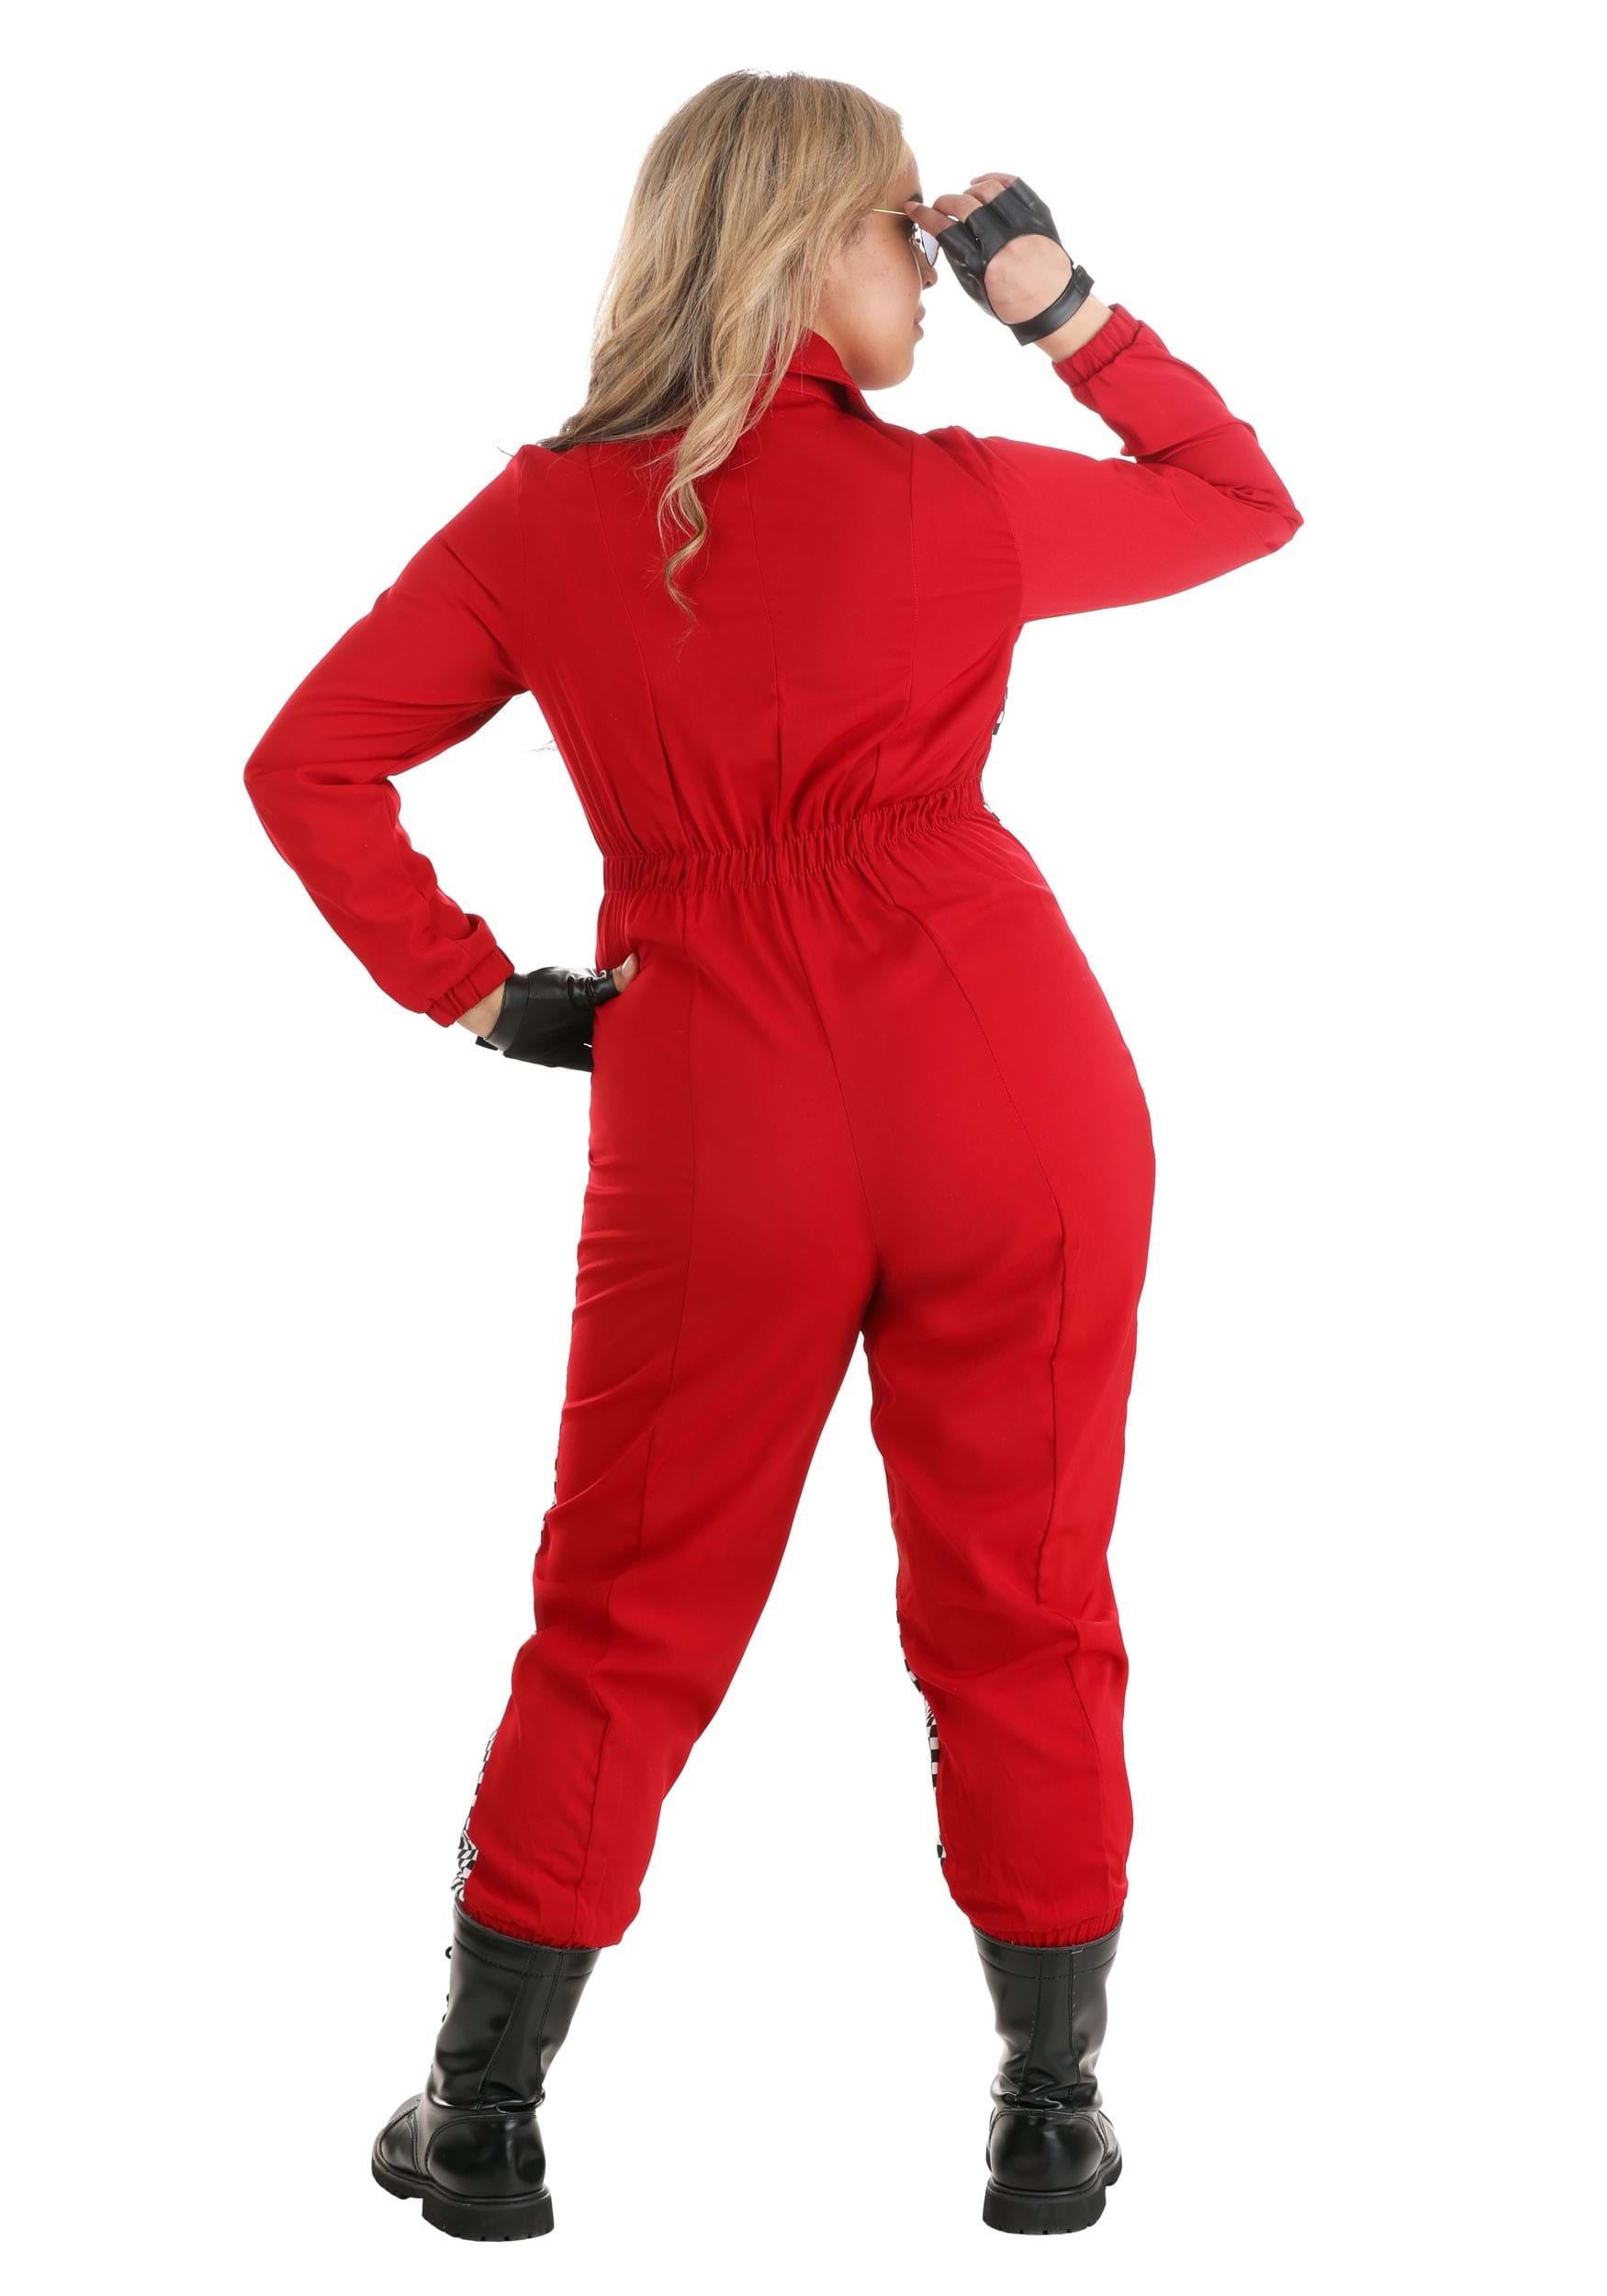 Racer Jumpsuit Fancy Dress Costume For Women